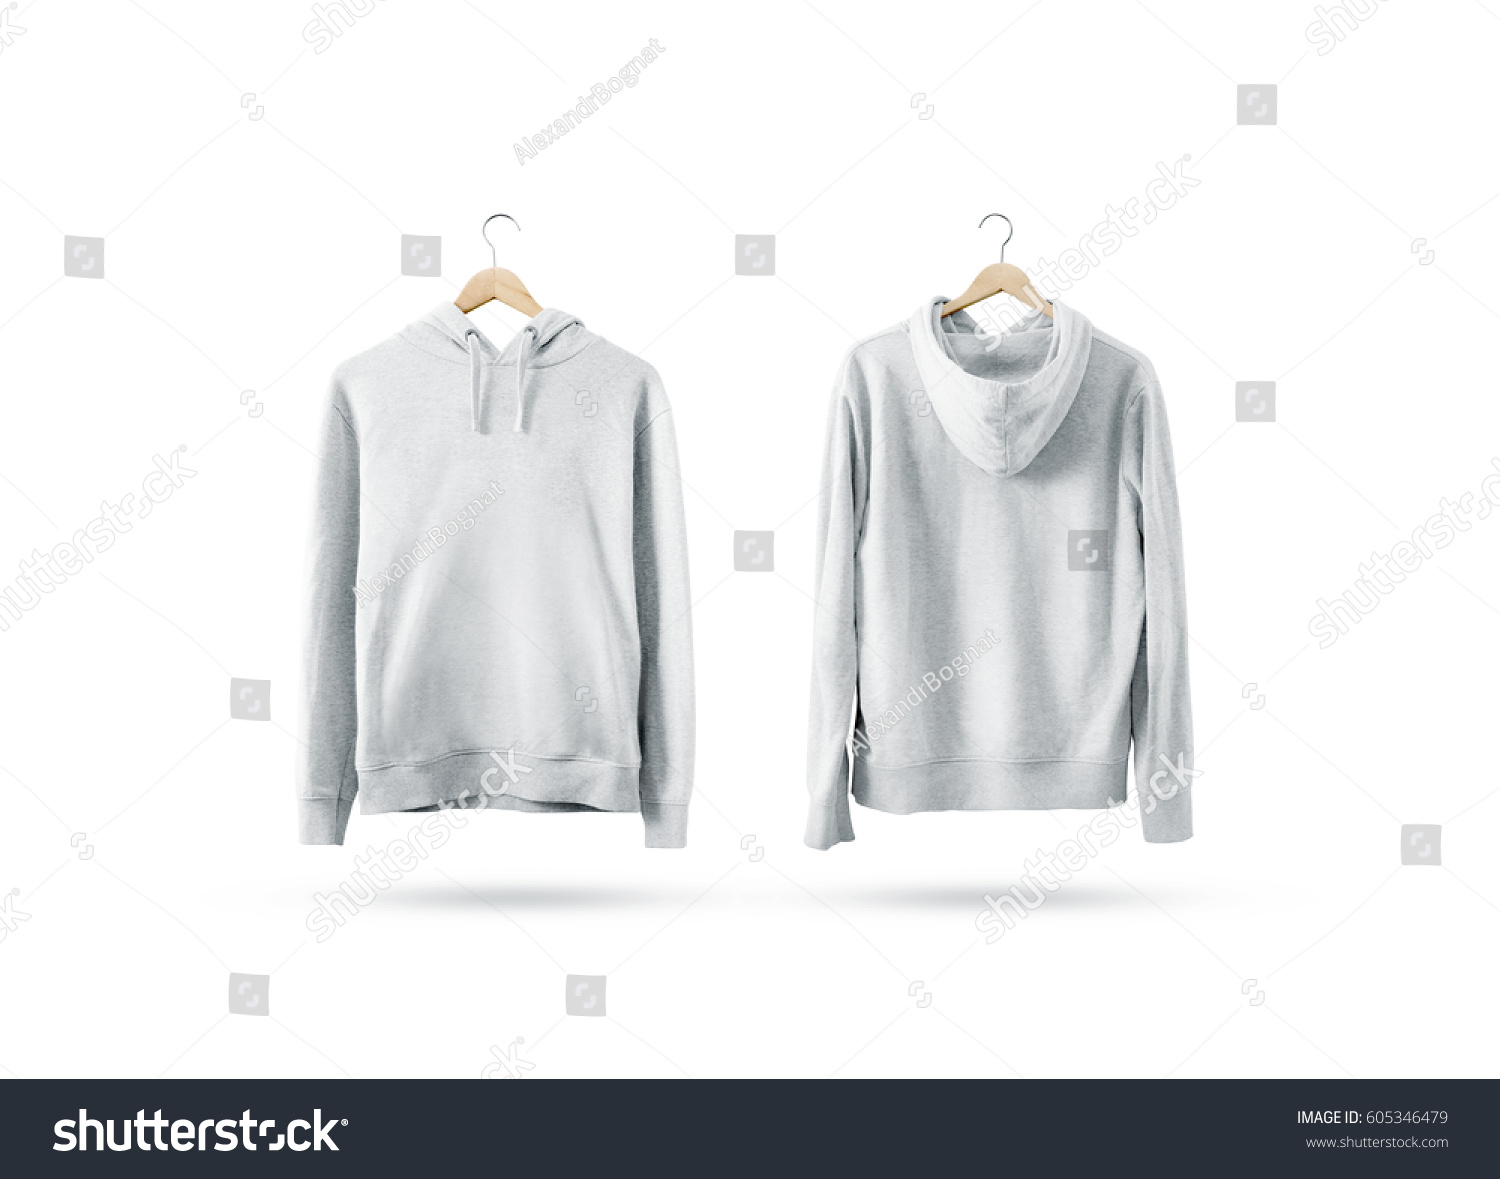 Download Blank White Sweatshirt Mockup Set Hanging Stock Photo 605346479 - Shutterstock